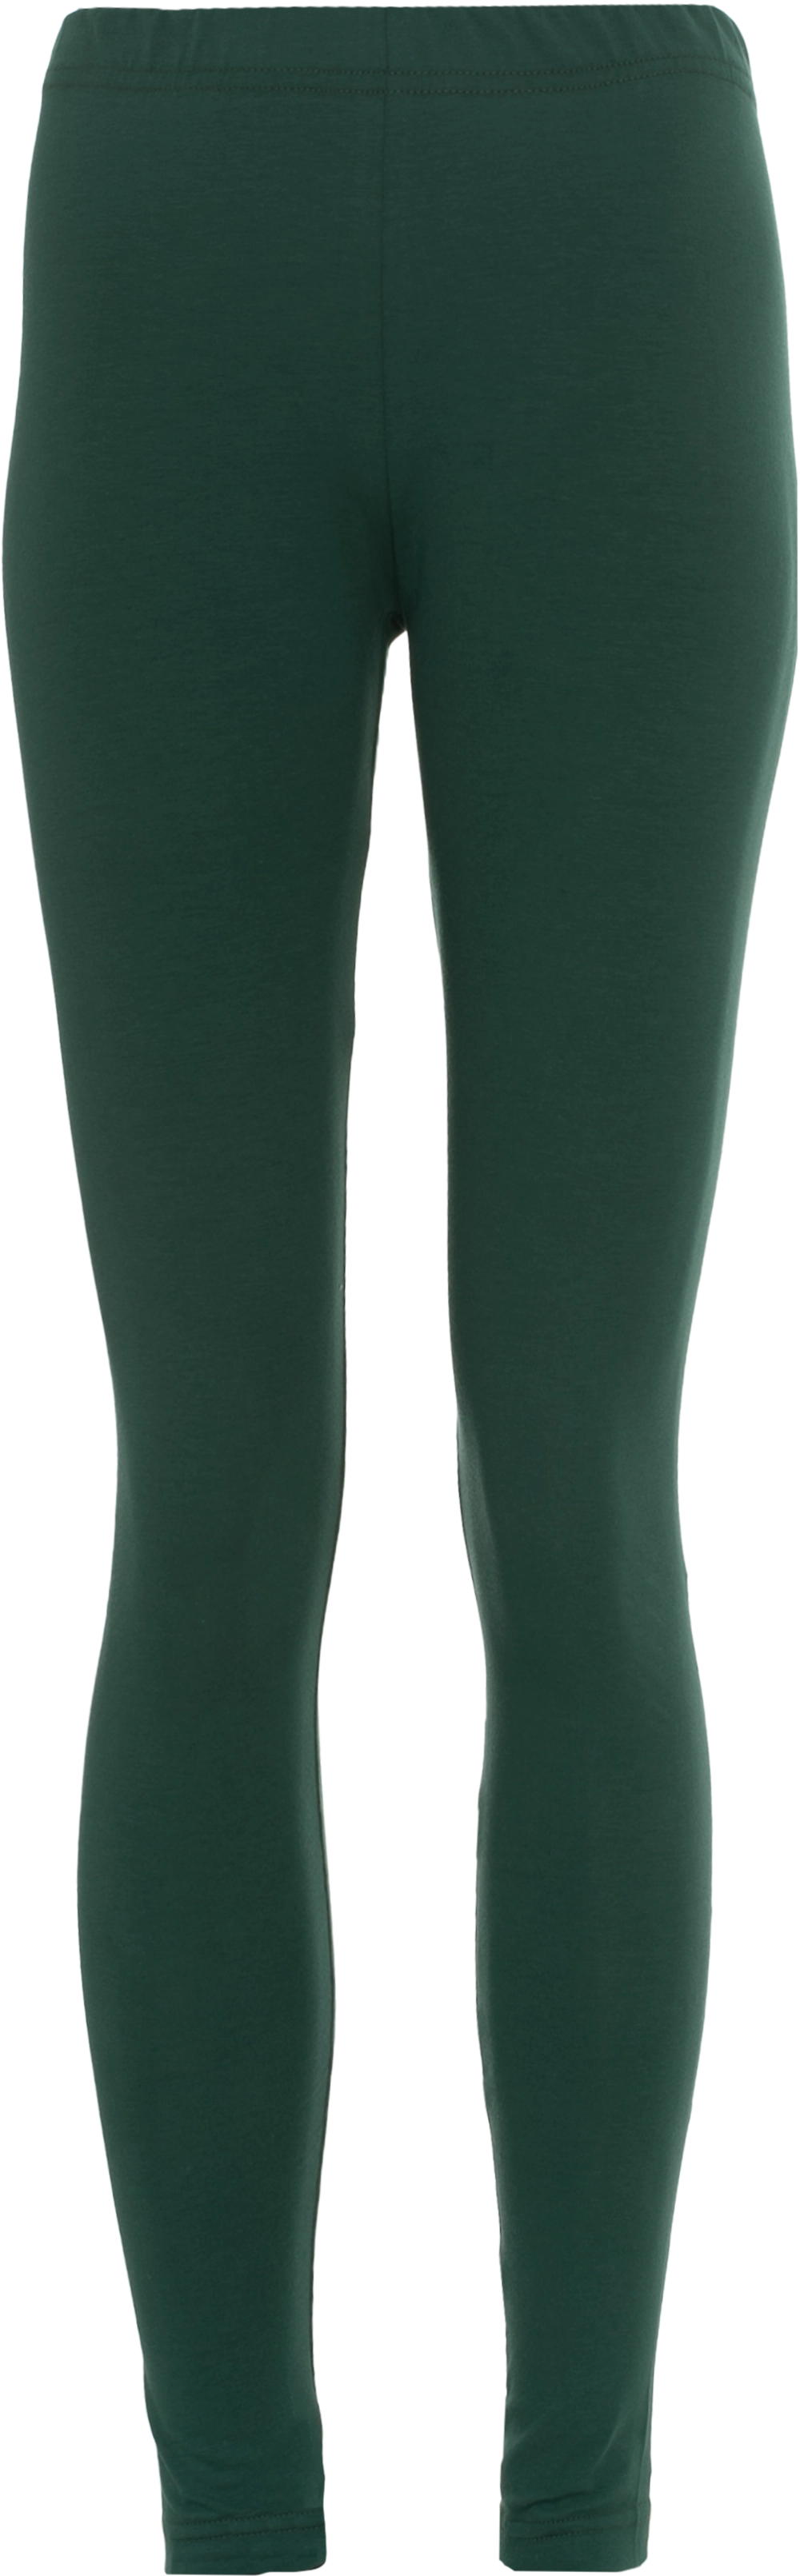 SORJA leggings, dark green - PaaPii Design